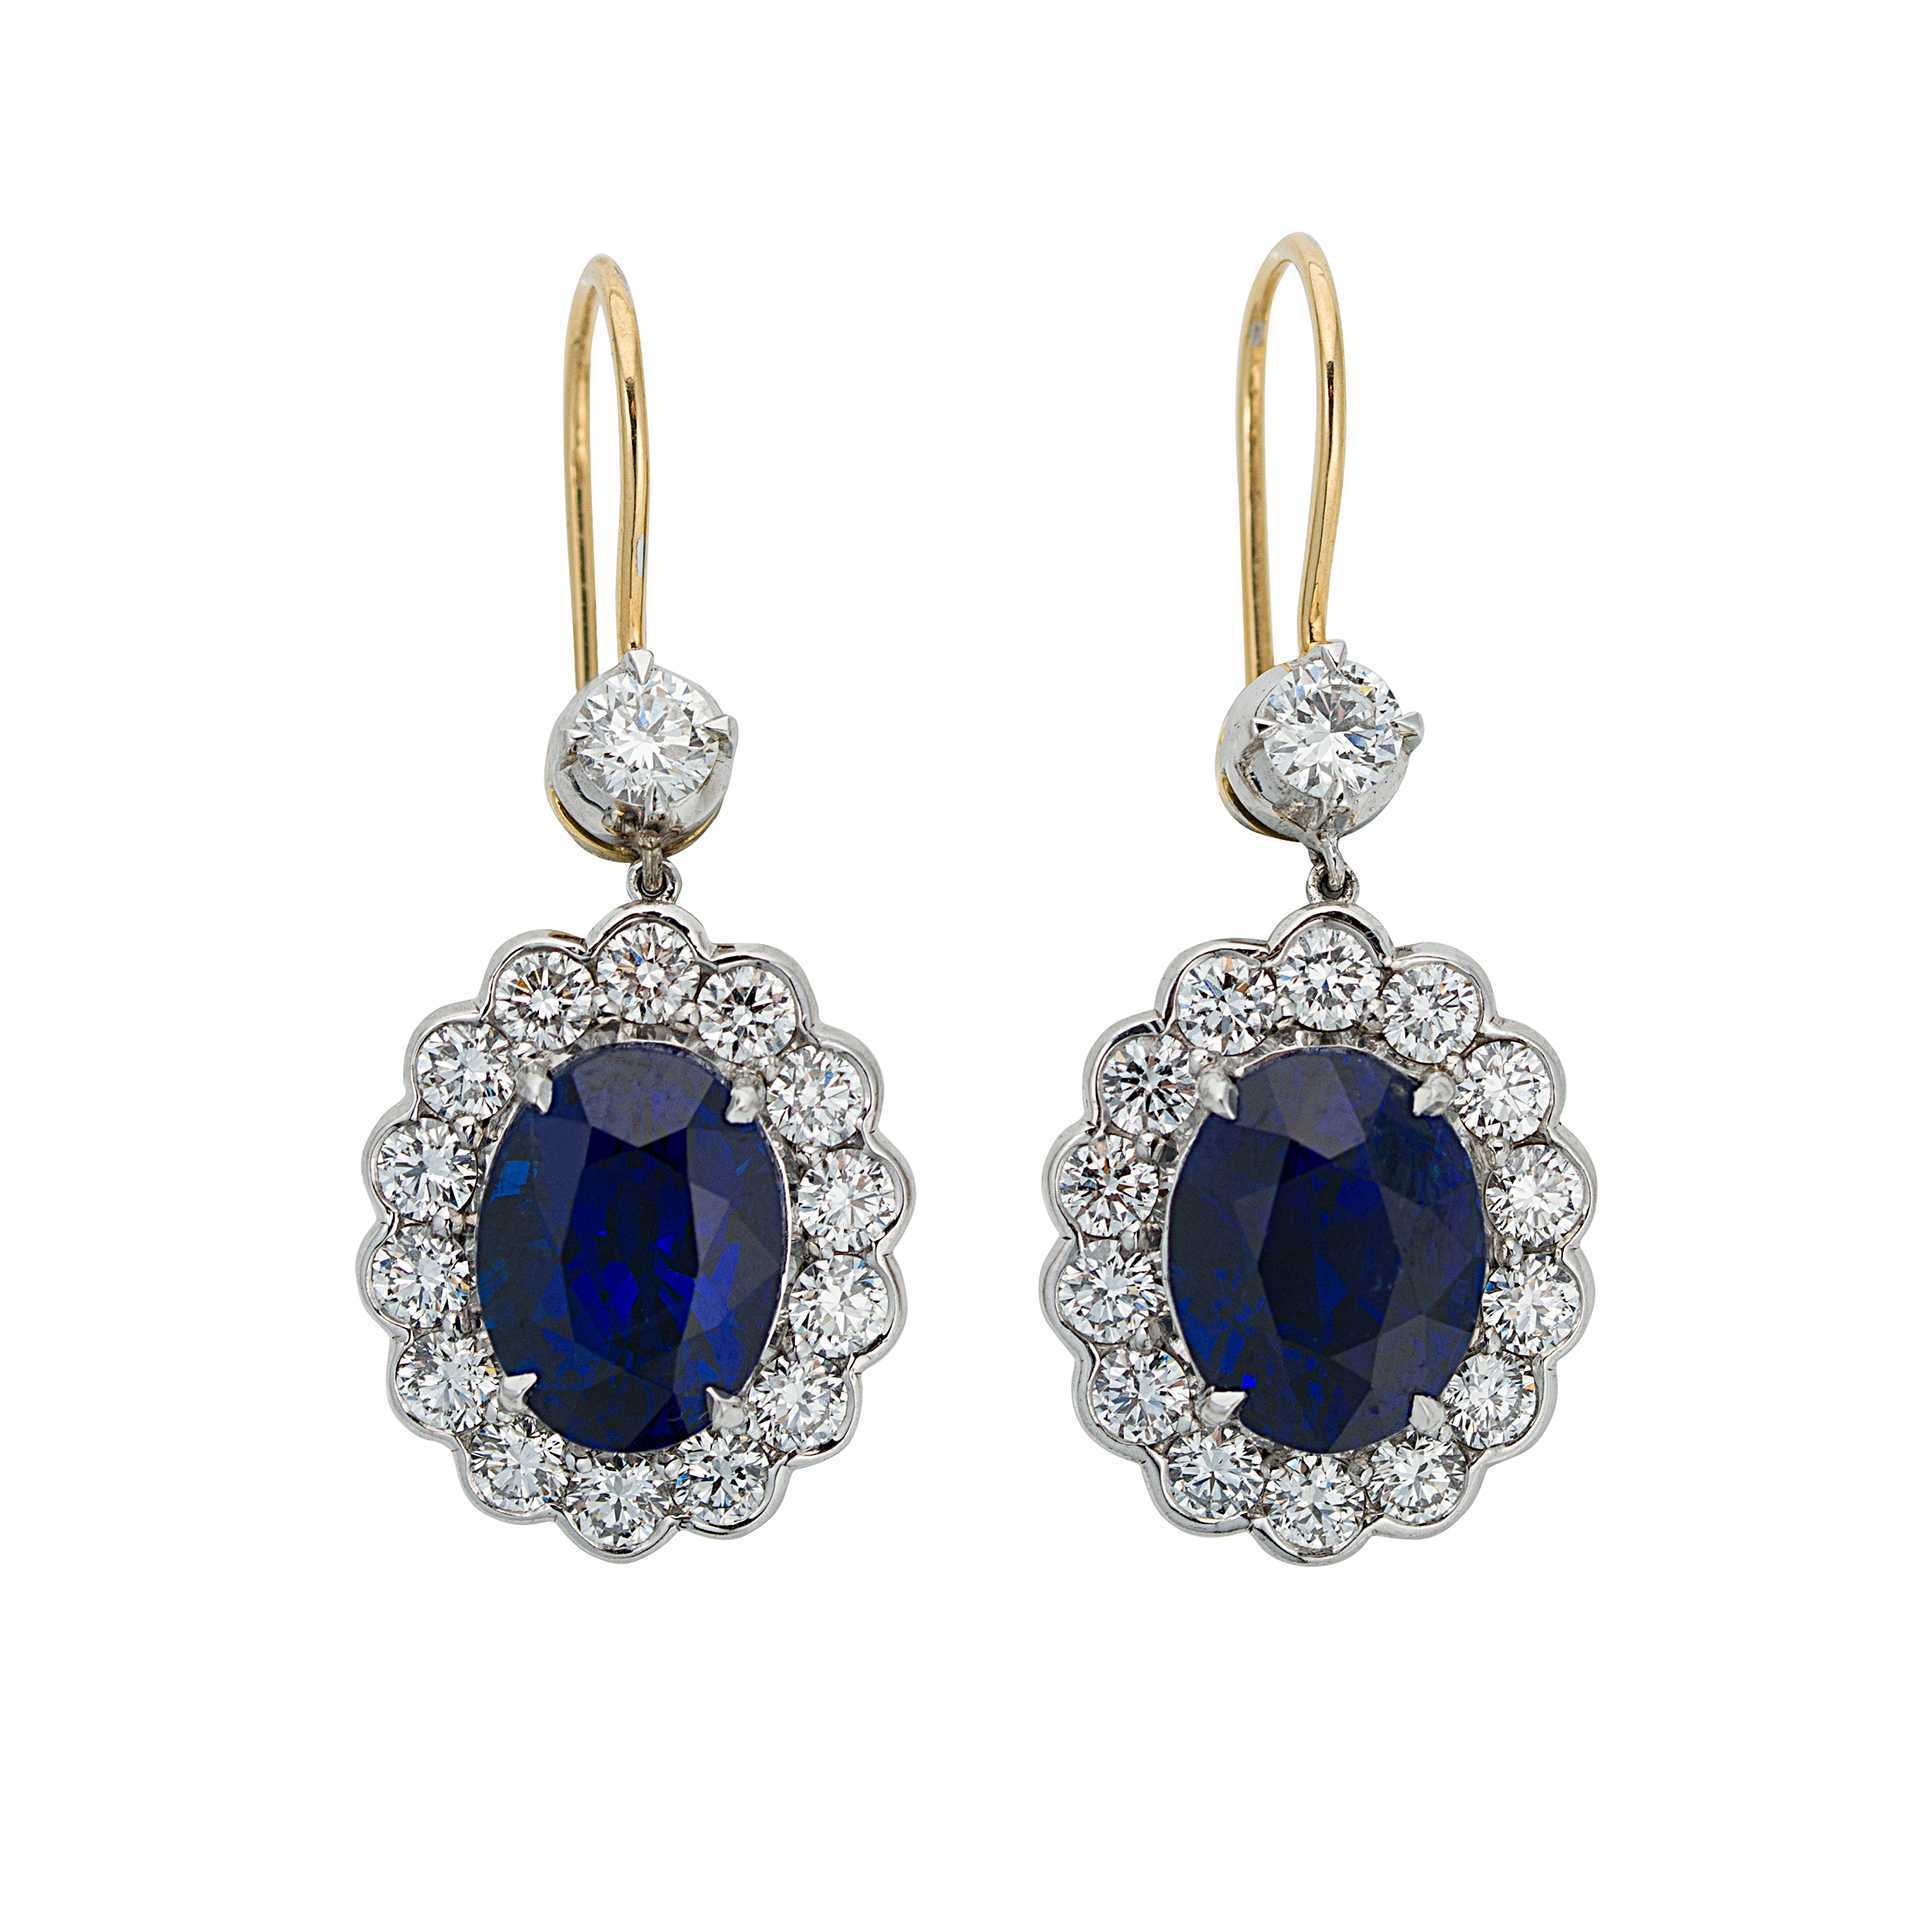 Lot 197: a pair of sapphire and diamond cluster ear pendants, estimate £8,000-£10,000.